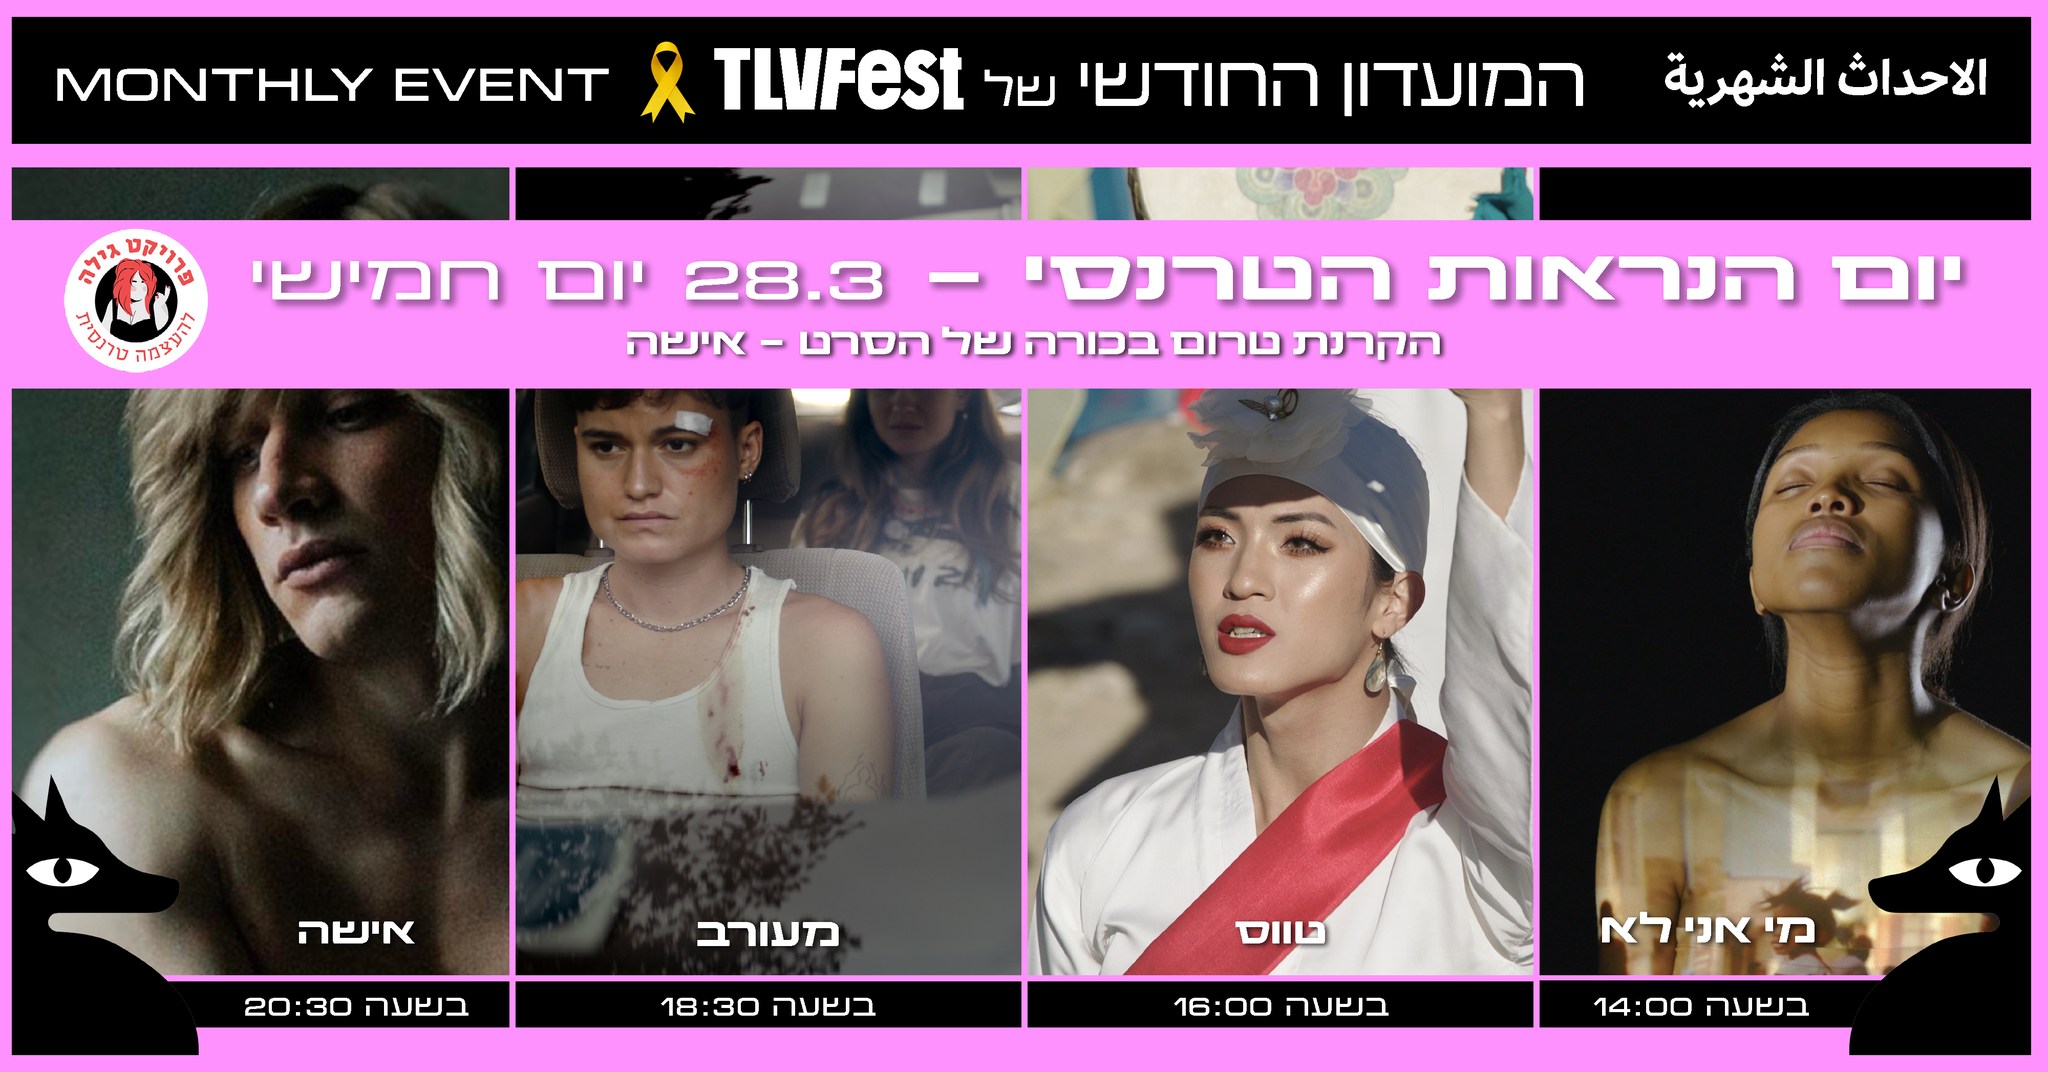 Trans Cinema Day - TLV Fest @ Cinematheque Tel Aviv